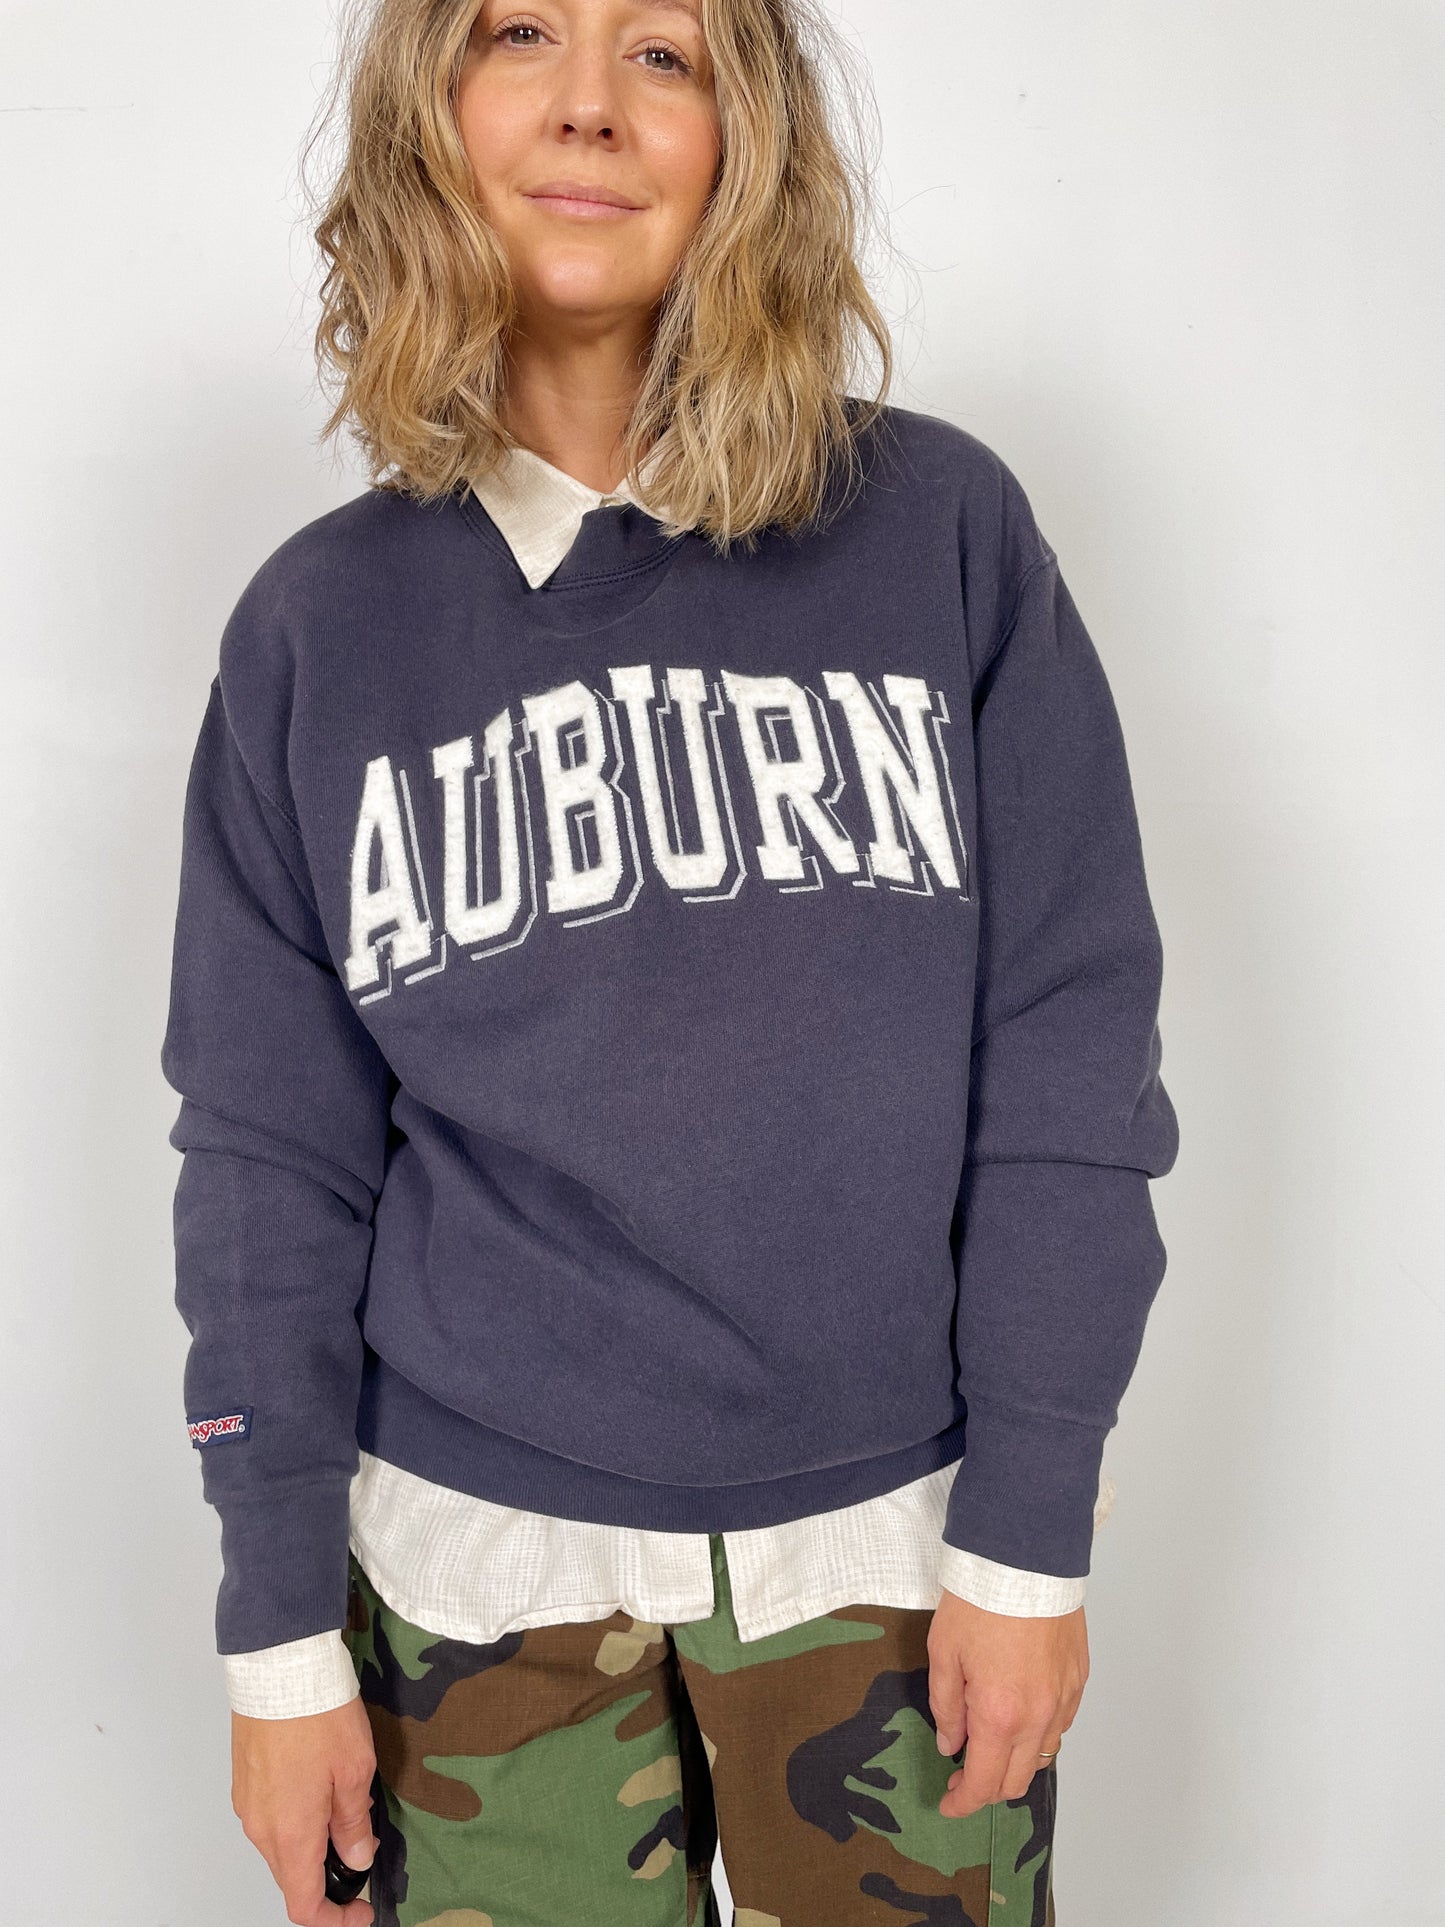 Auburn Jansport Navy Sweatshirt